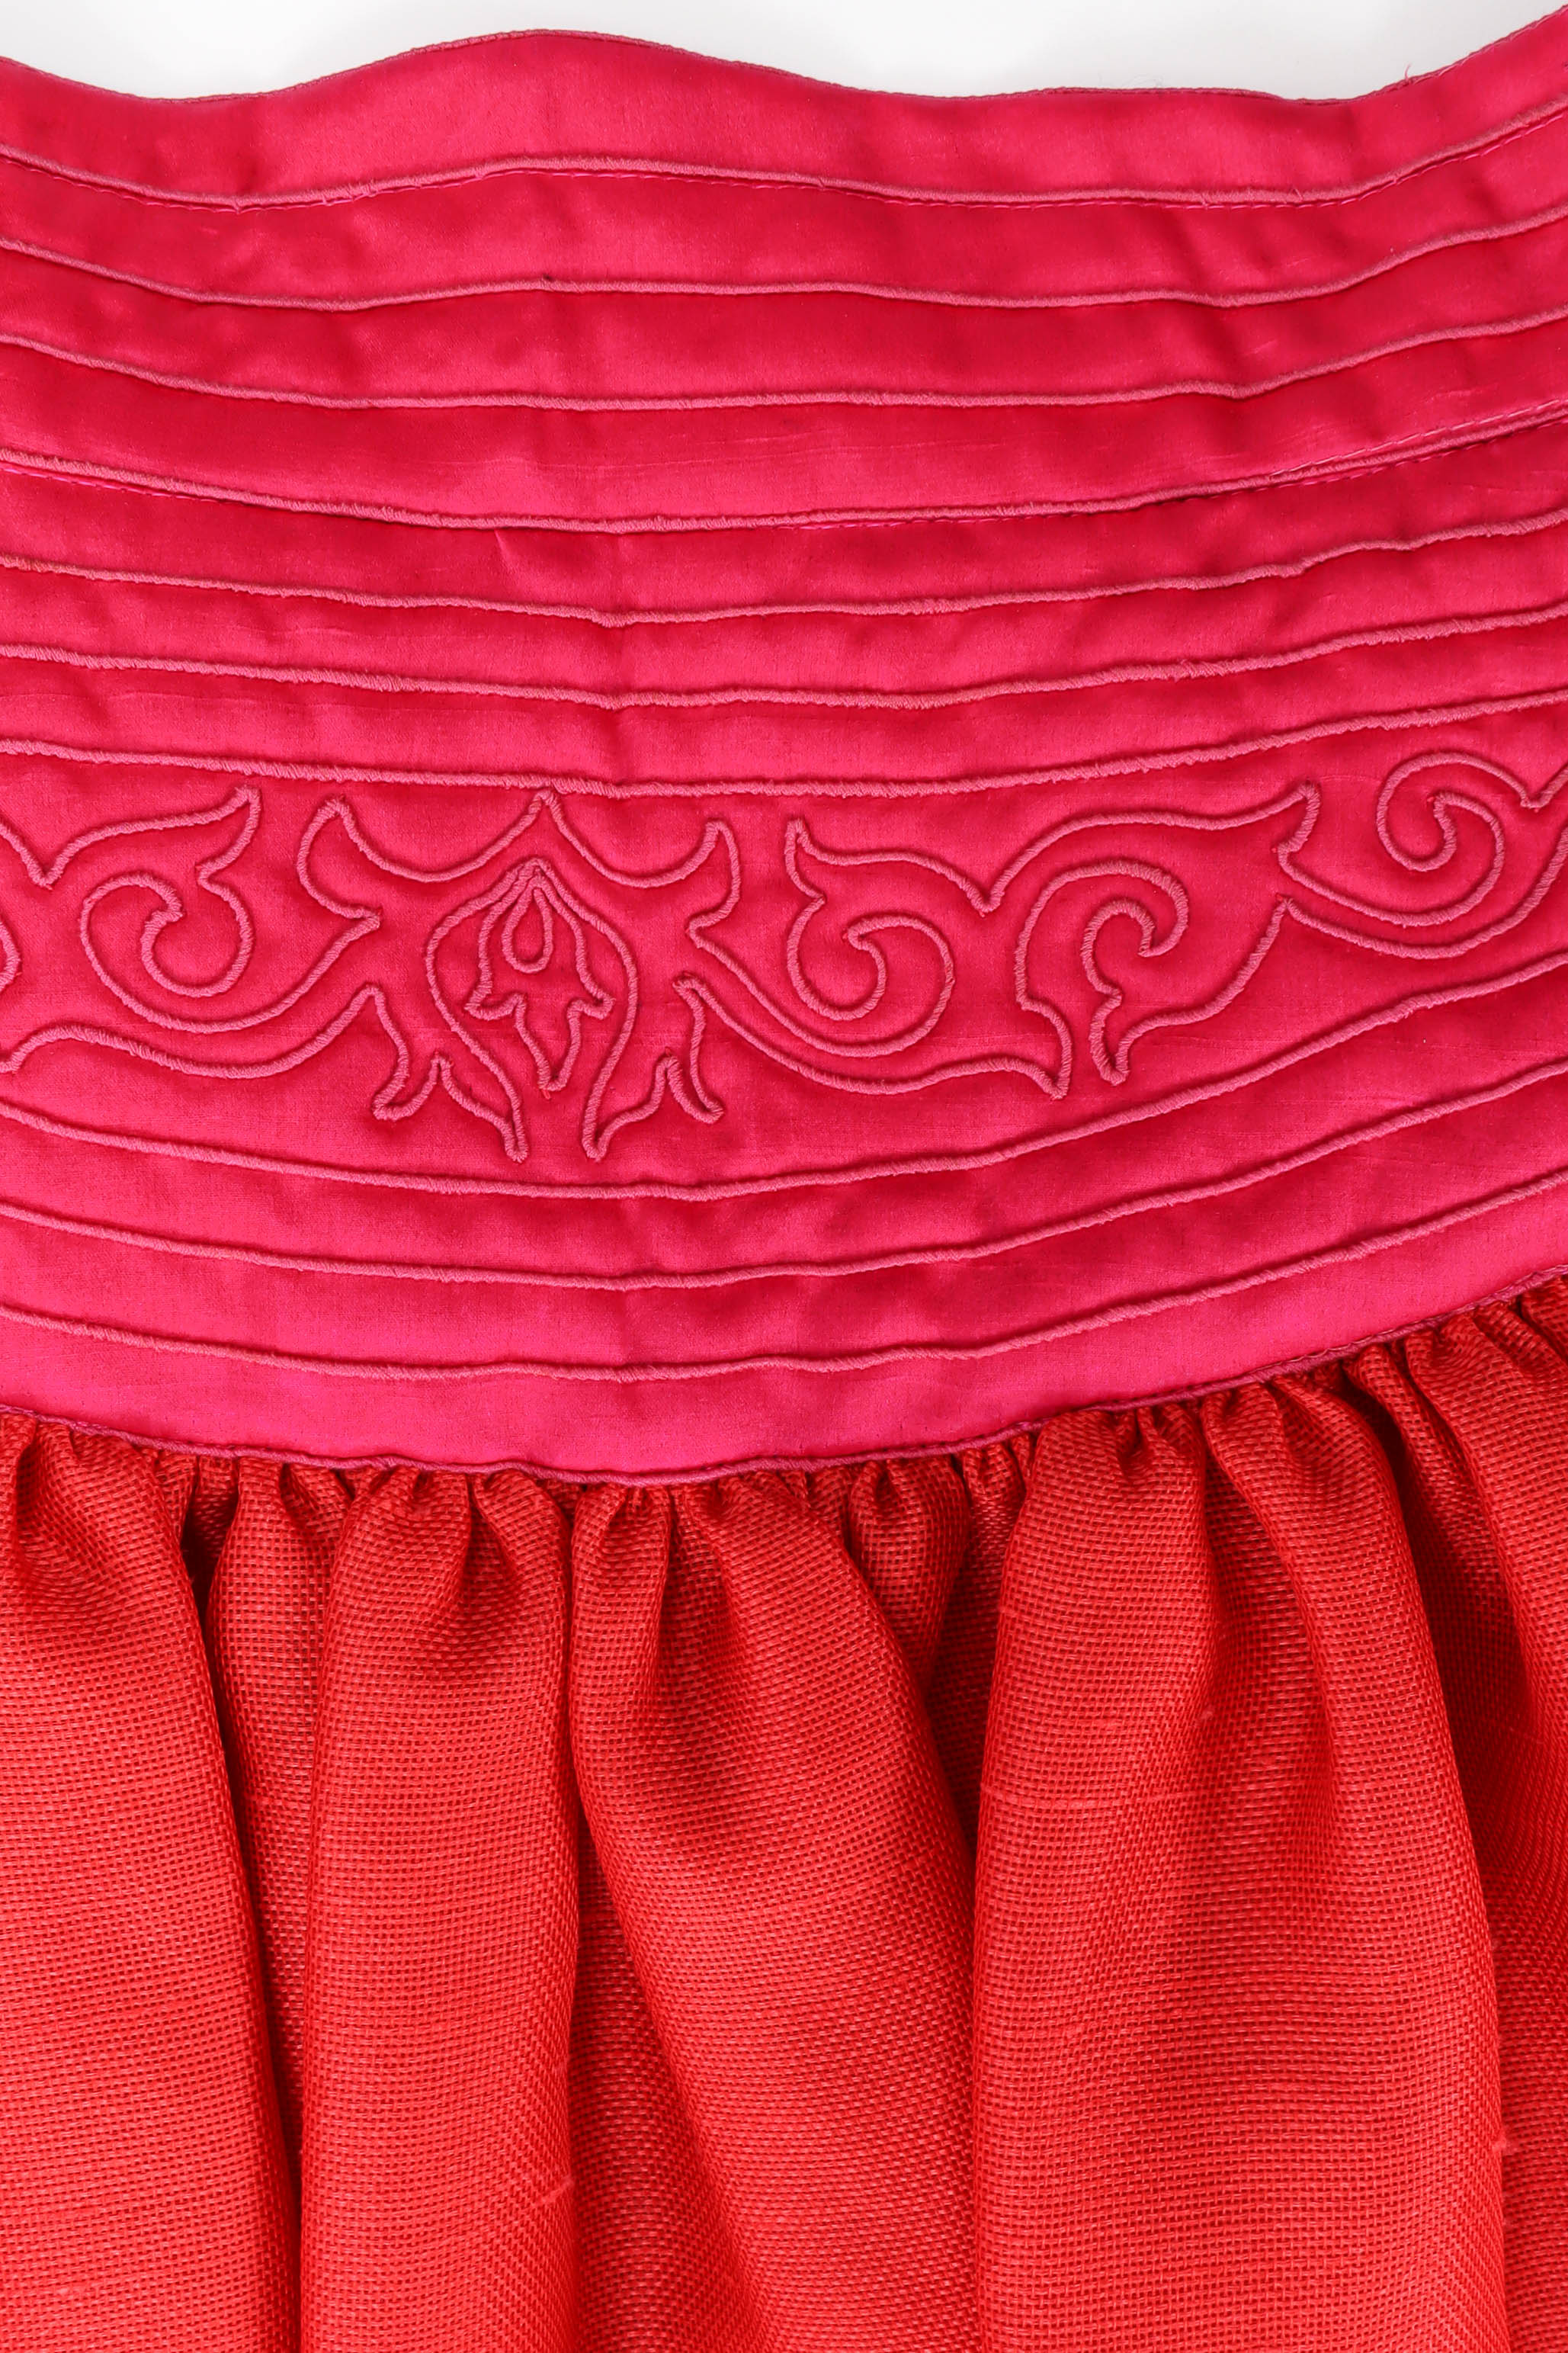 Vintage Oscar de la Renta Floral Top & Skirt Set fleur skirt waistline flat @ Recess LA